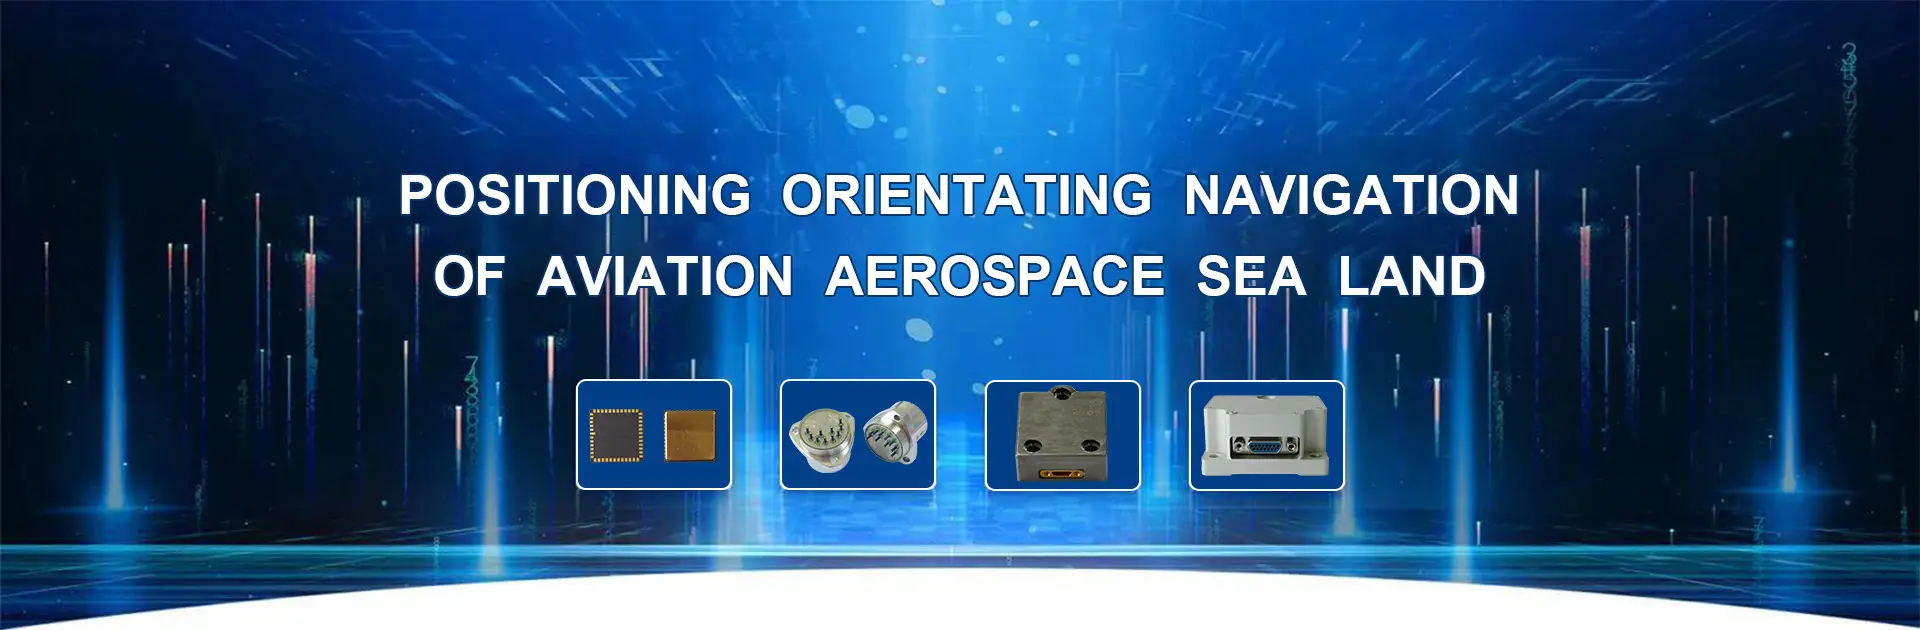 ERICCO-POSITIONING-ORIENTATING-NAVIGATION-OF-AVIATION-AEROSPACE-SEA-LAND-Banner003